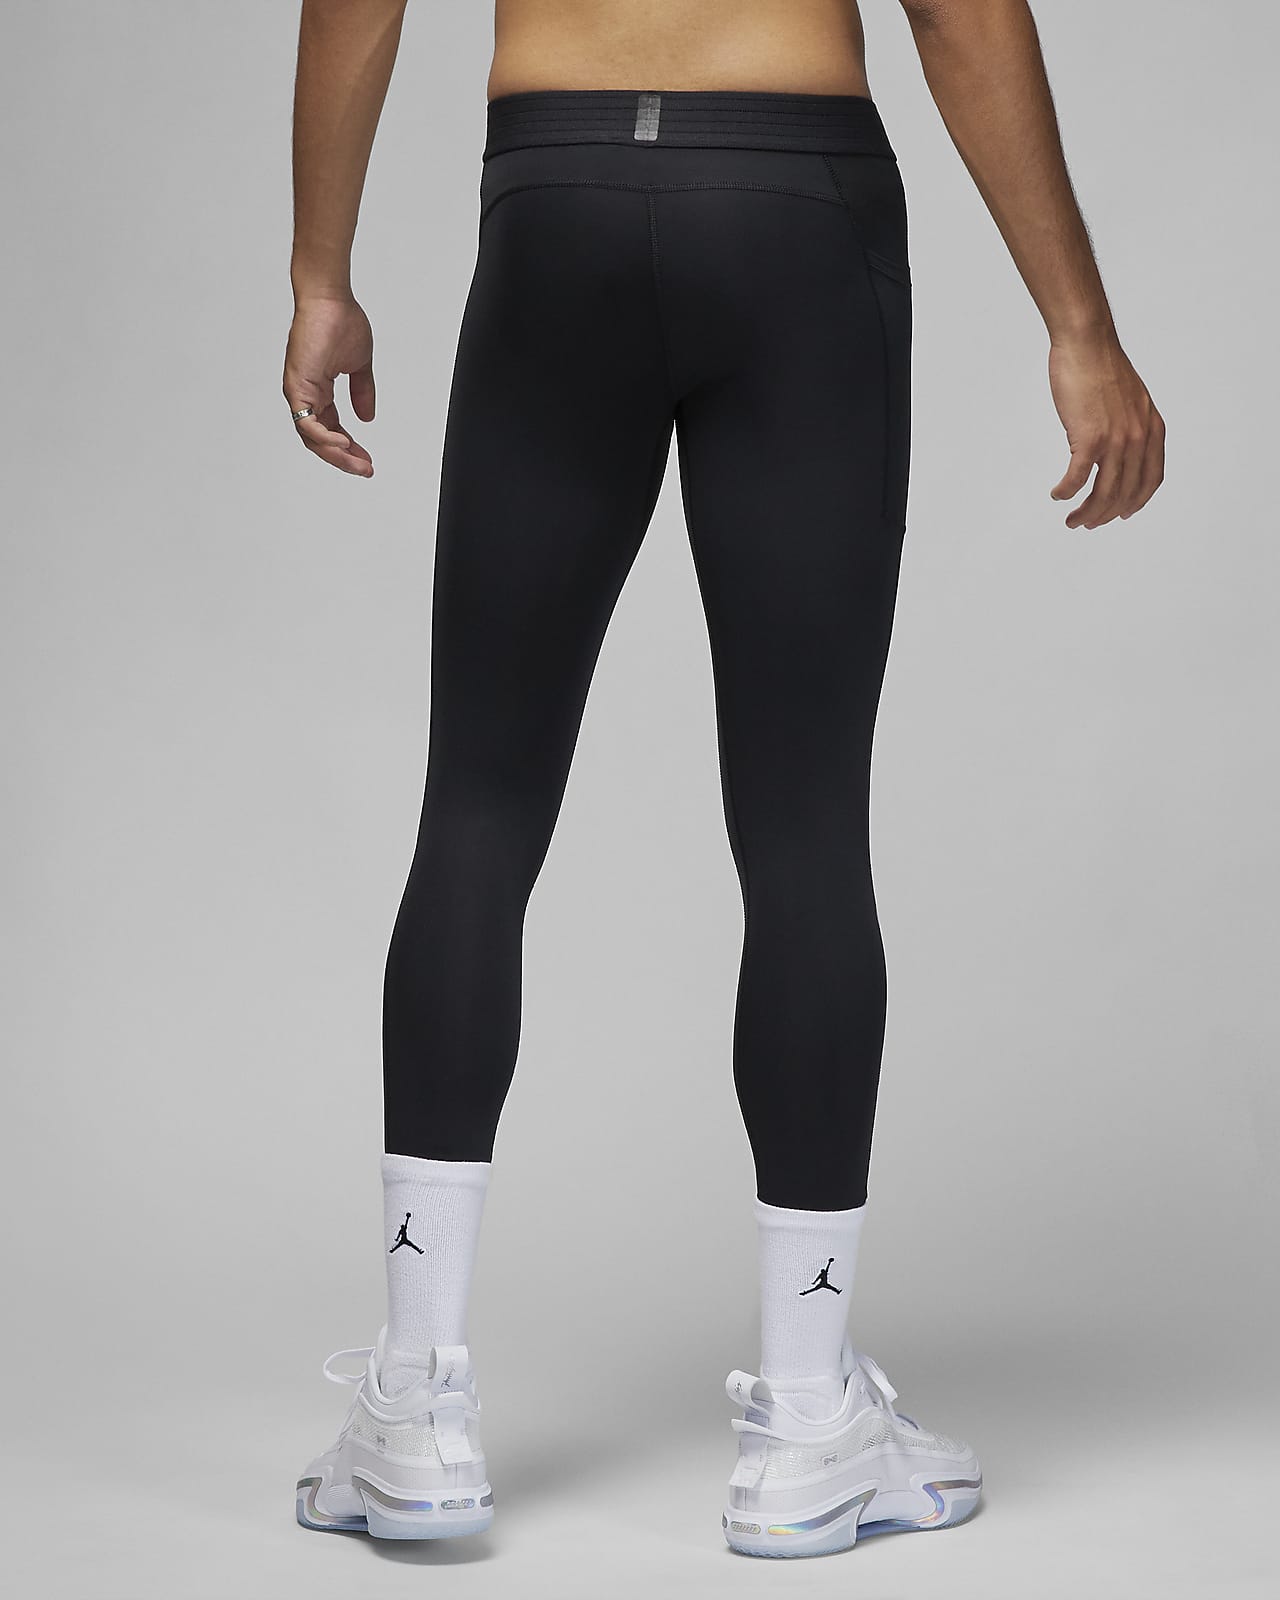 Legging de compression Nike Pro 3/4 Basketball Tights Gris pour homme